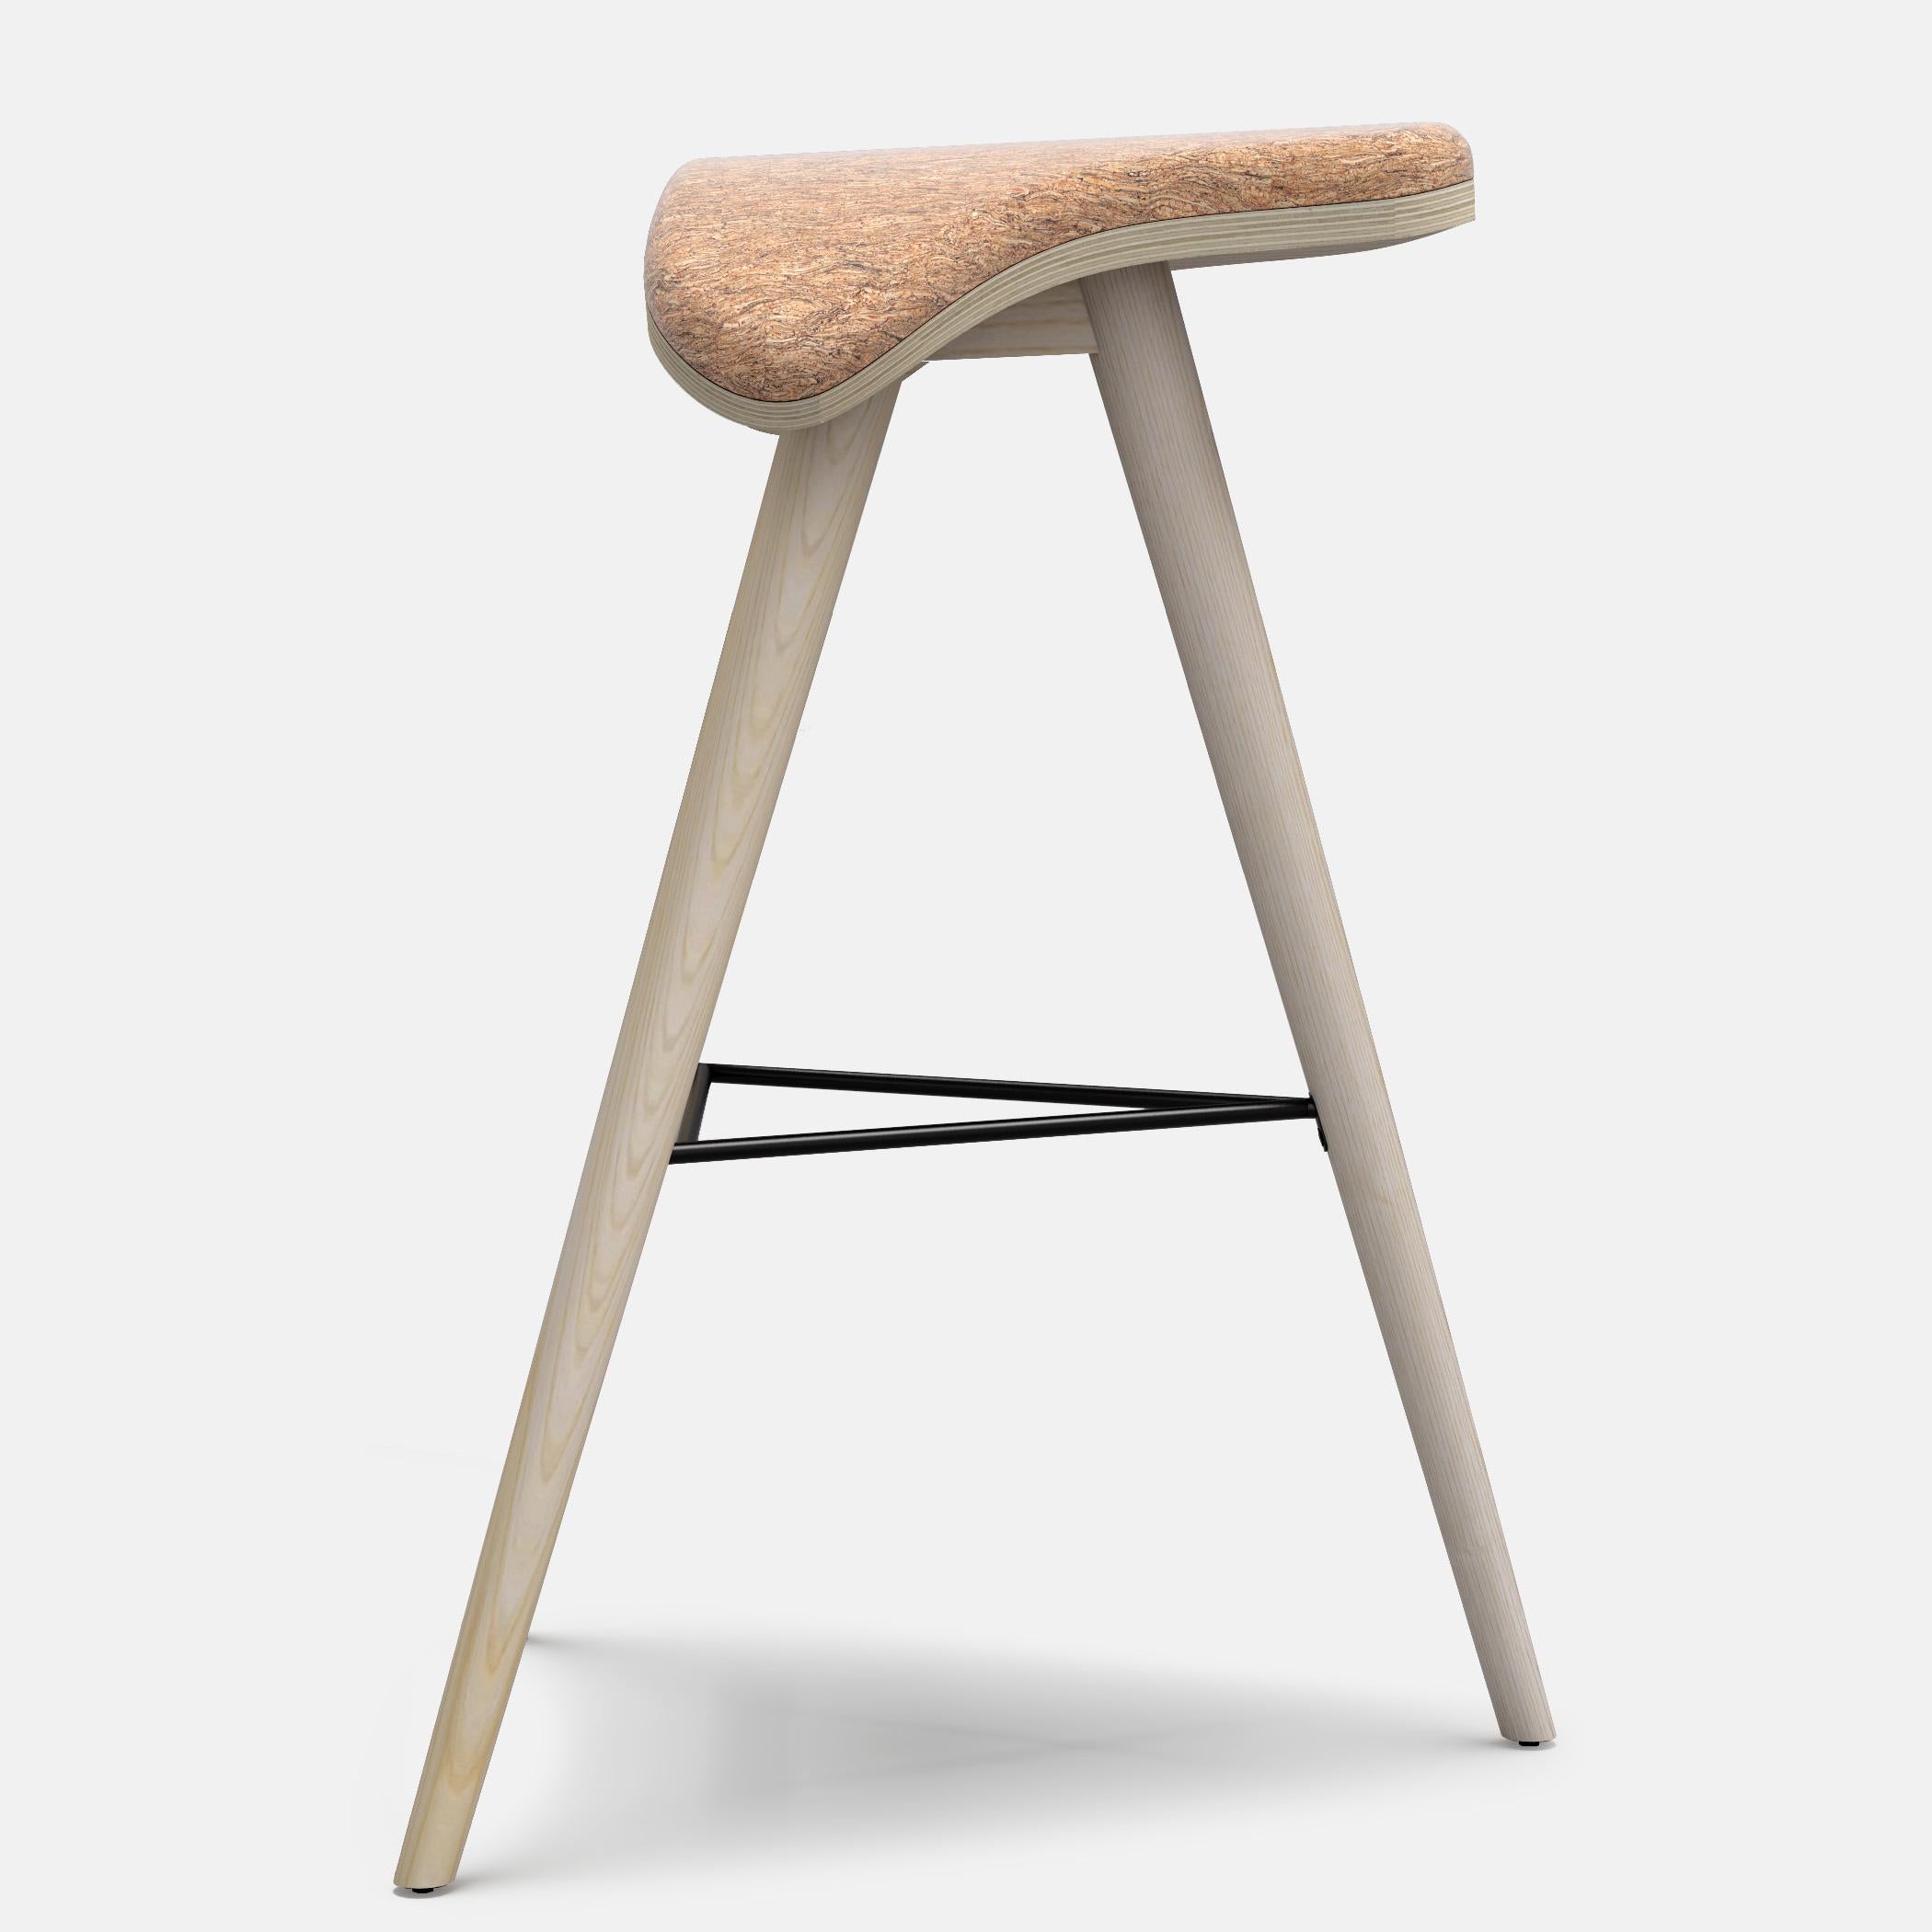 Ash and fabric horse high stool by Alexandre Caldas
Dimensions: W 50 x D 55 x H 79 cm
Materials: Ash, fabric.